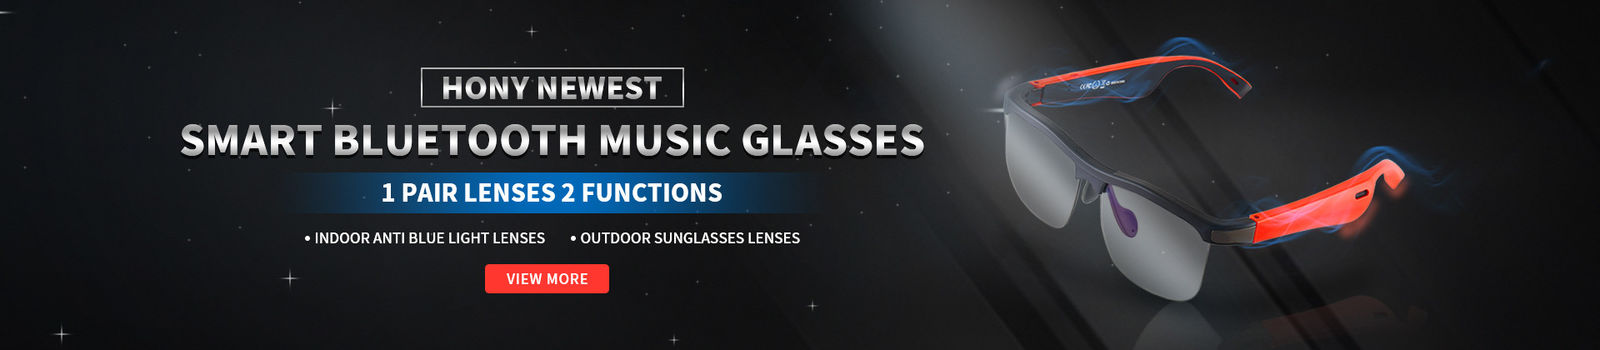 bluetooth ses güneş gözlüğü